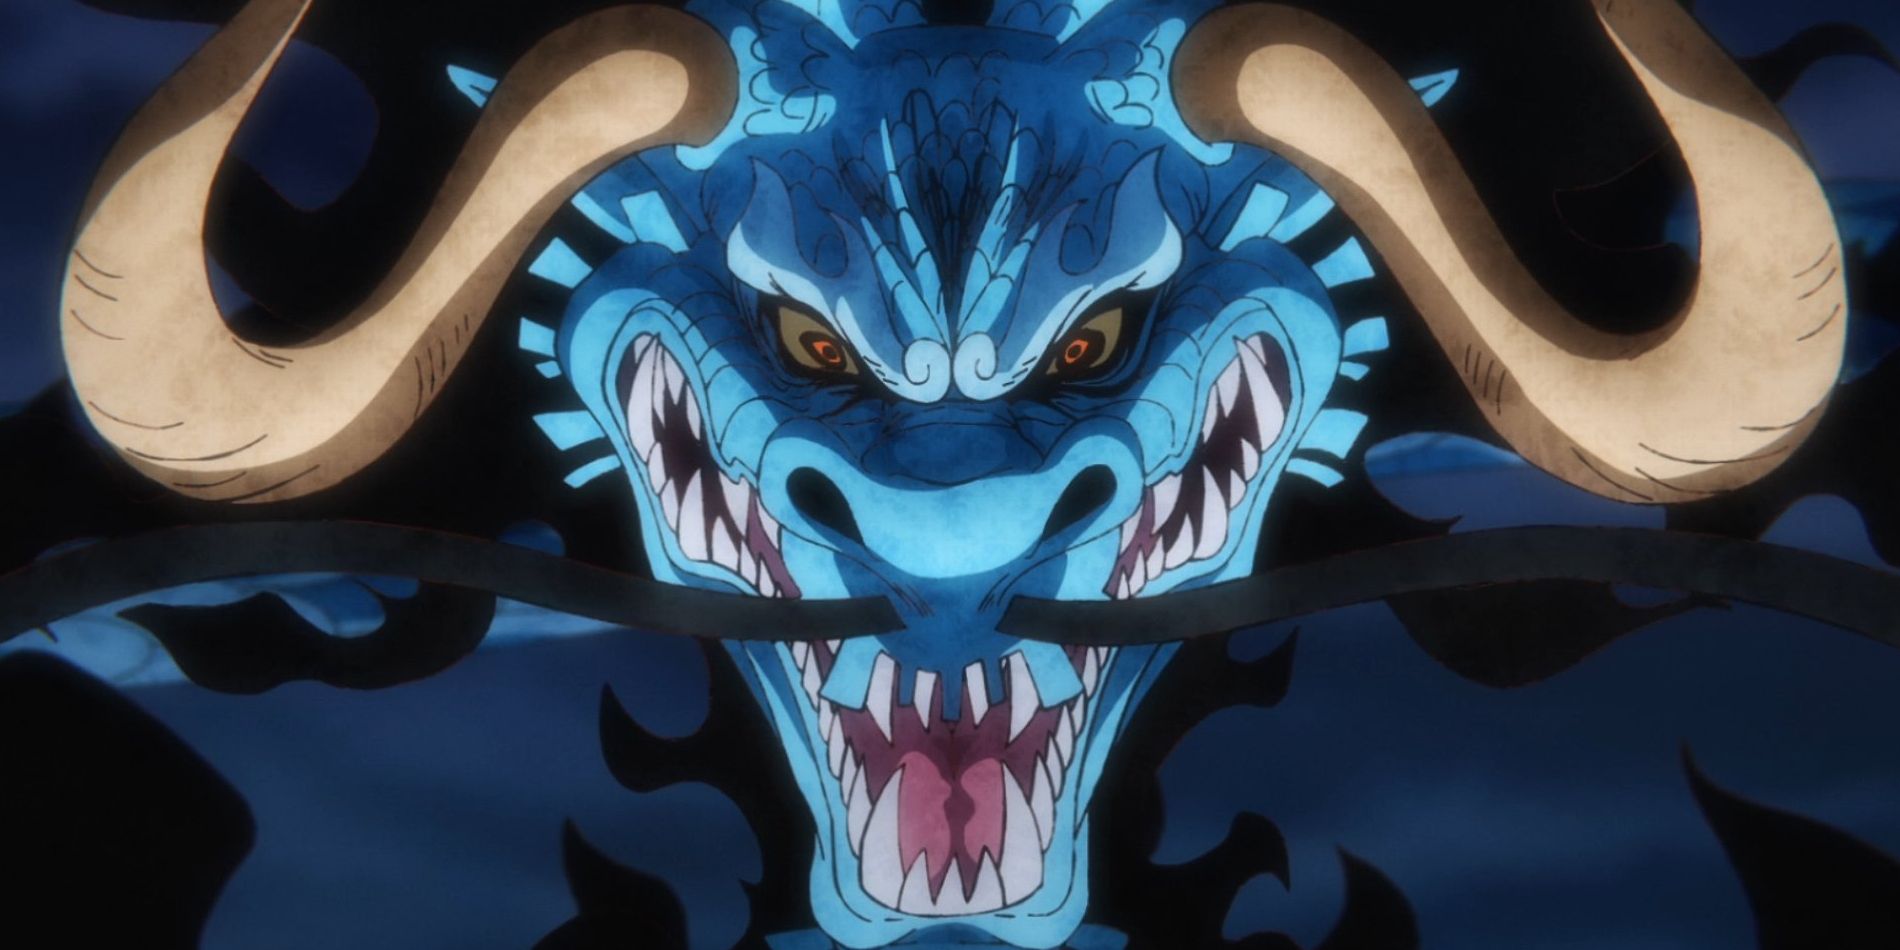 Kaido's dragon form